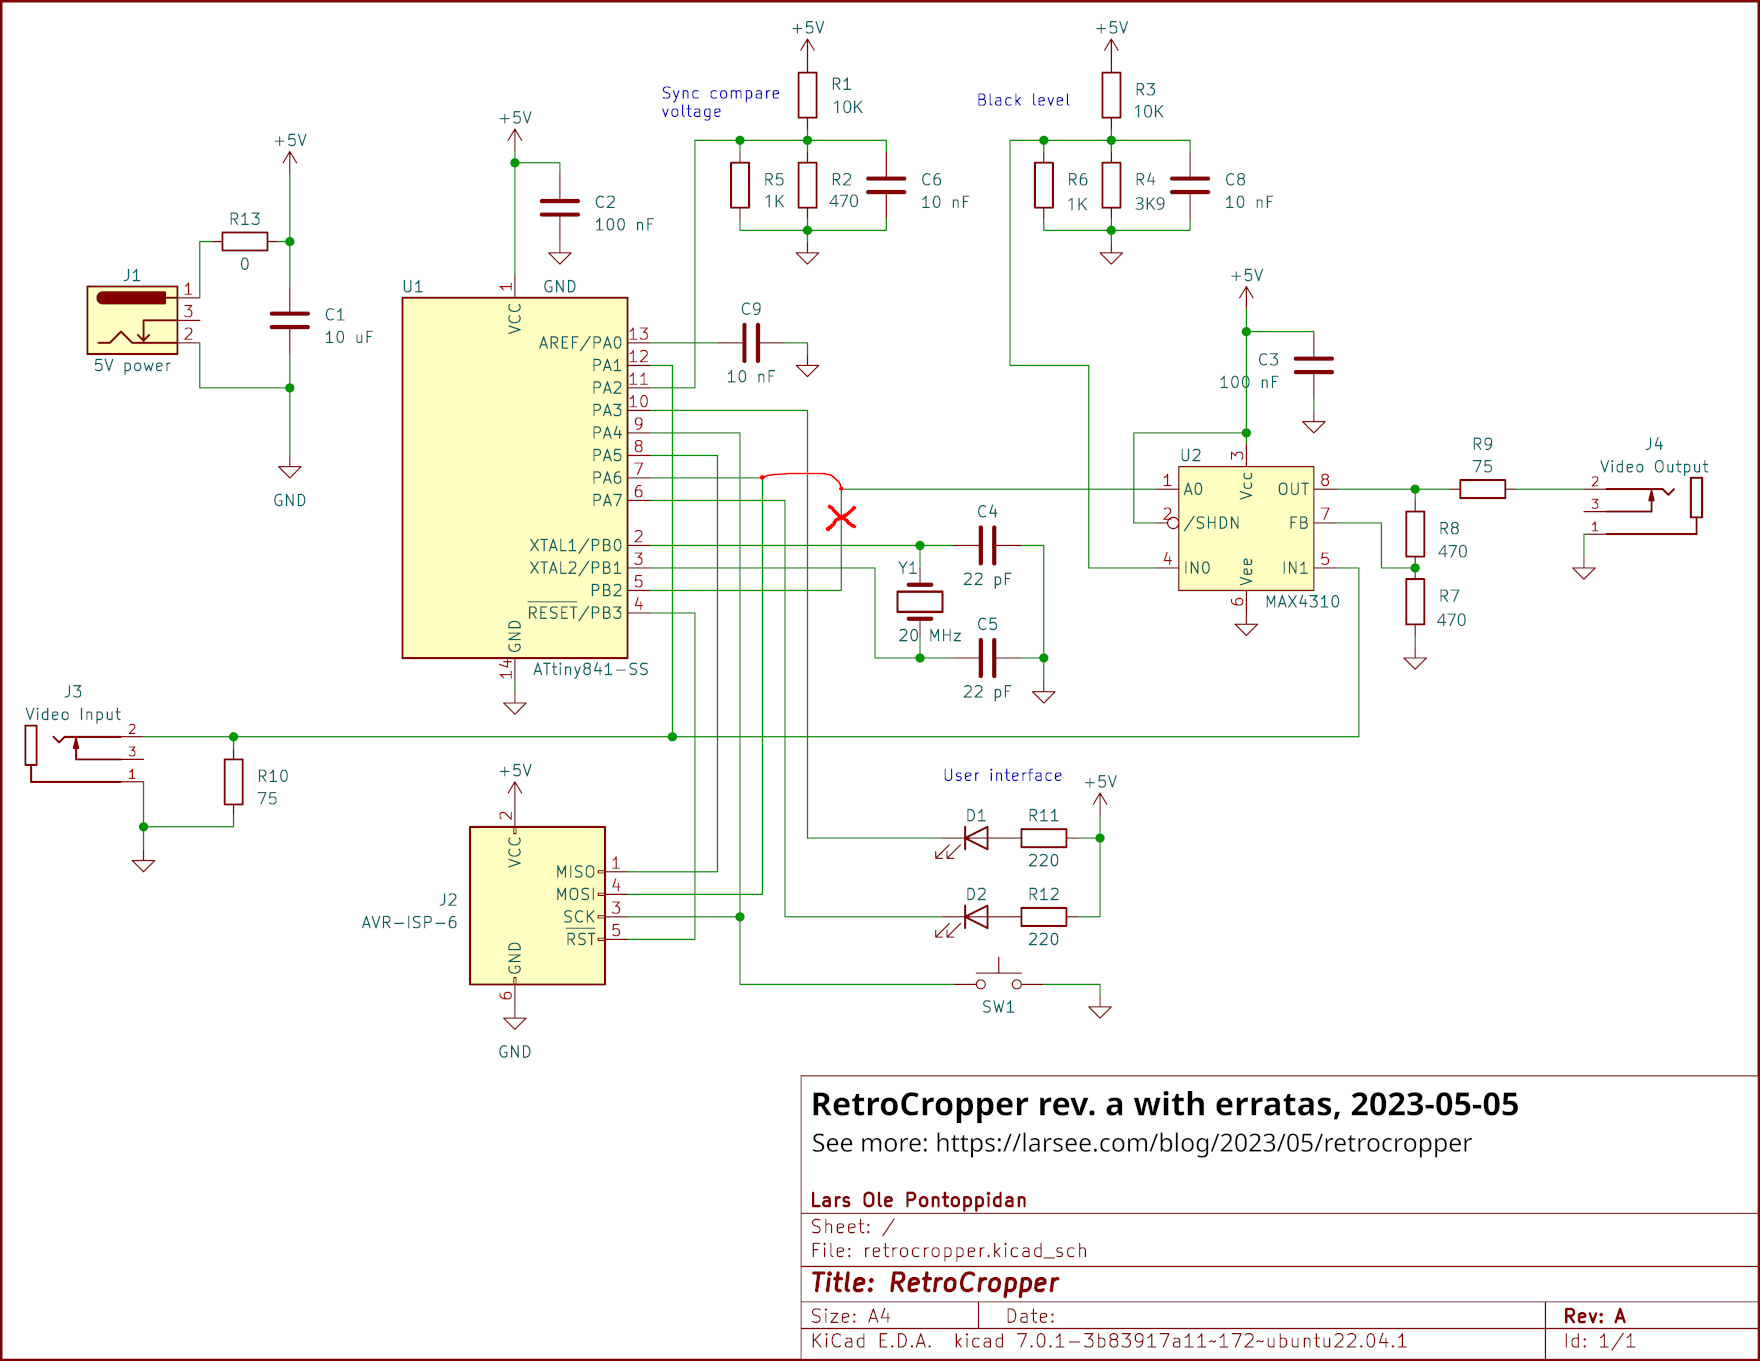 Retrocropper rev. a schematic with erratas